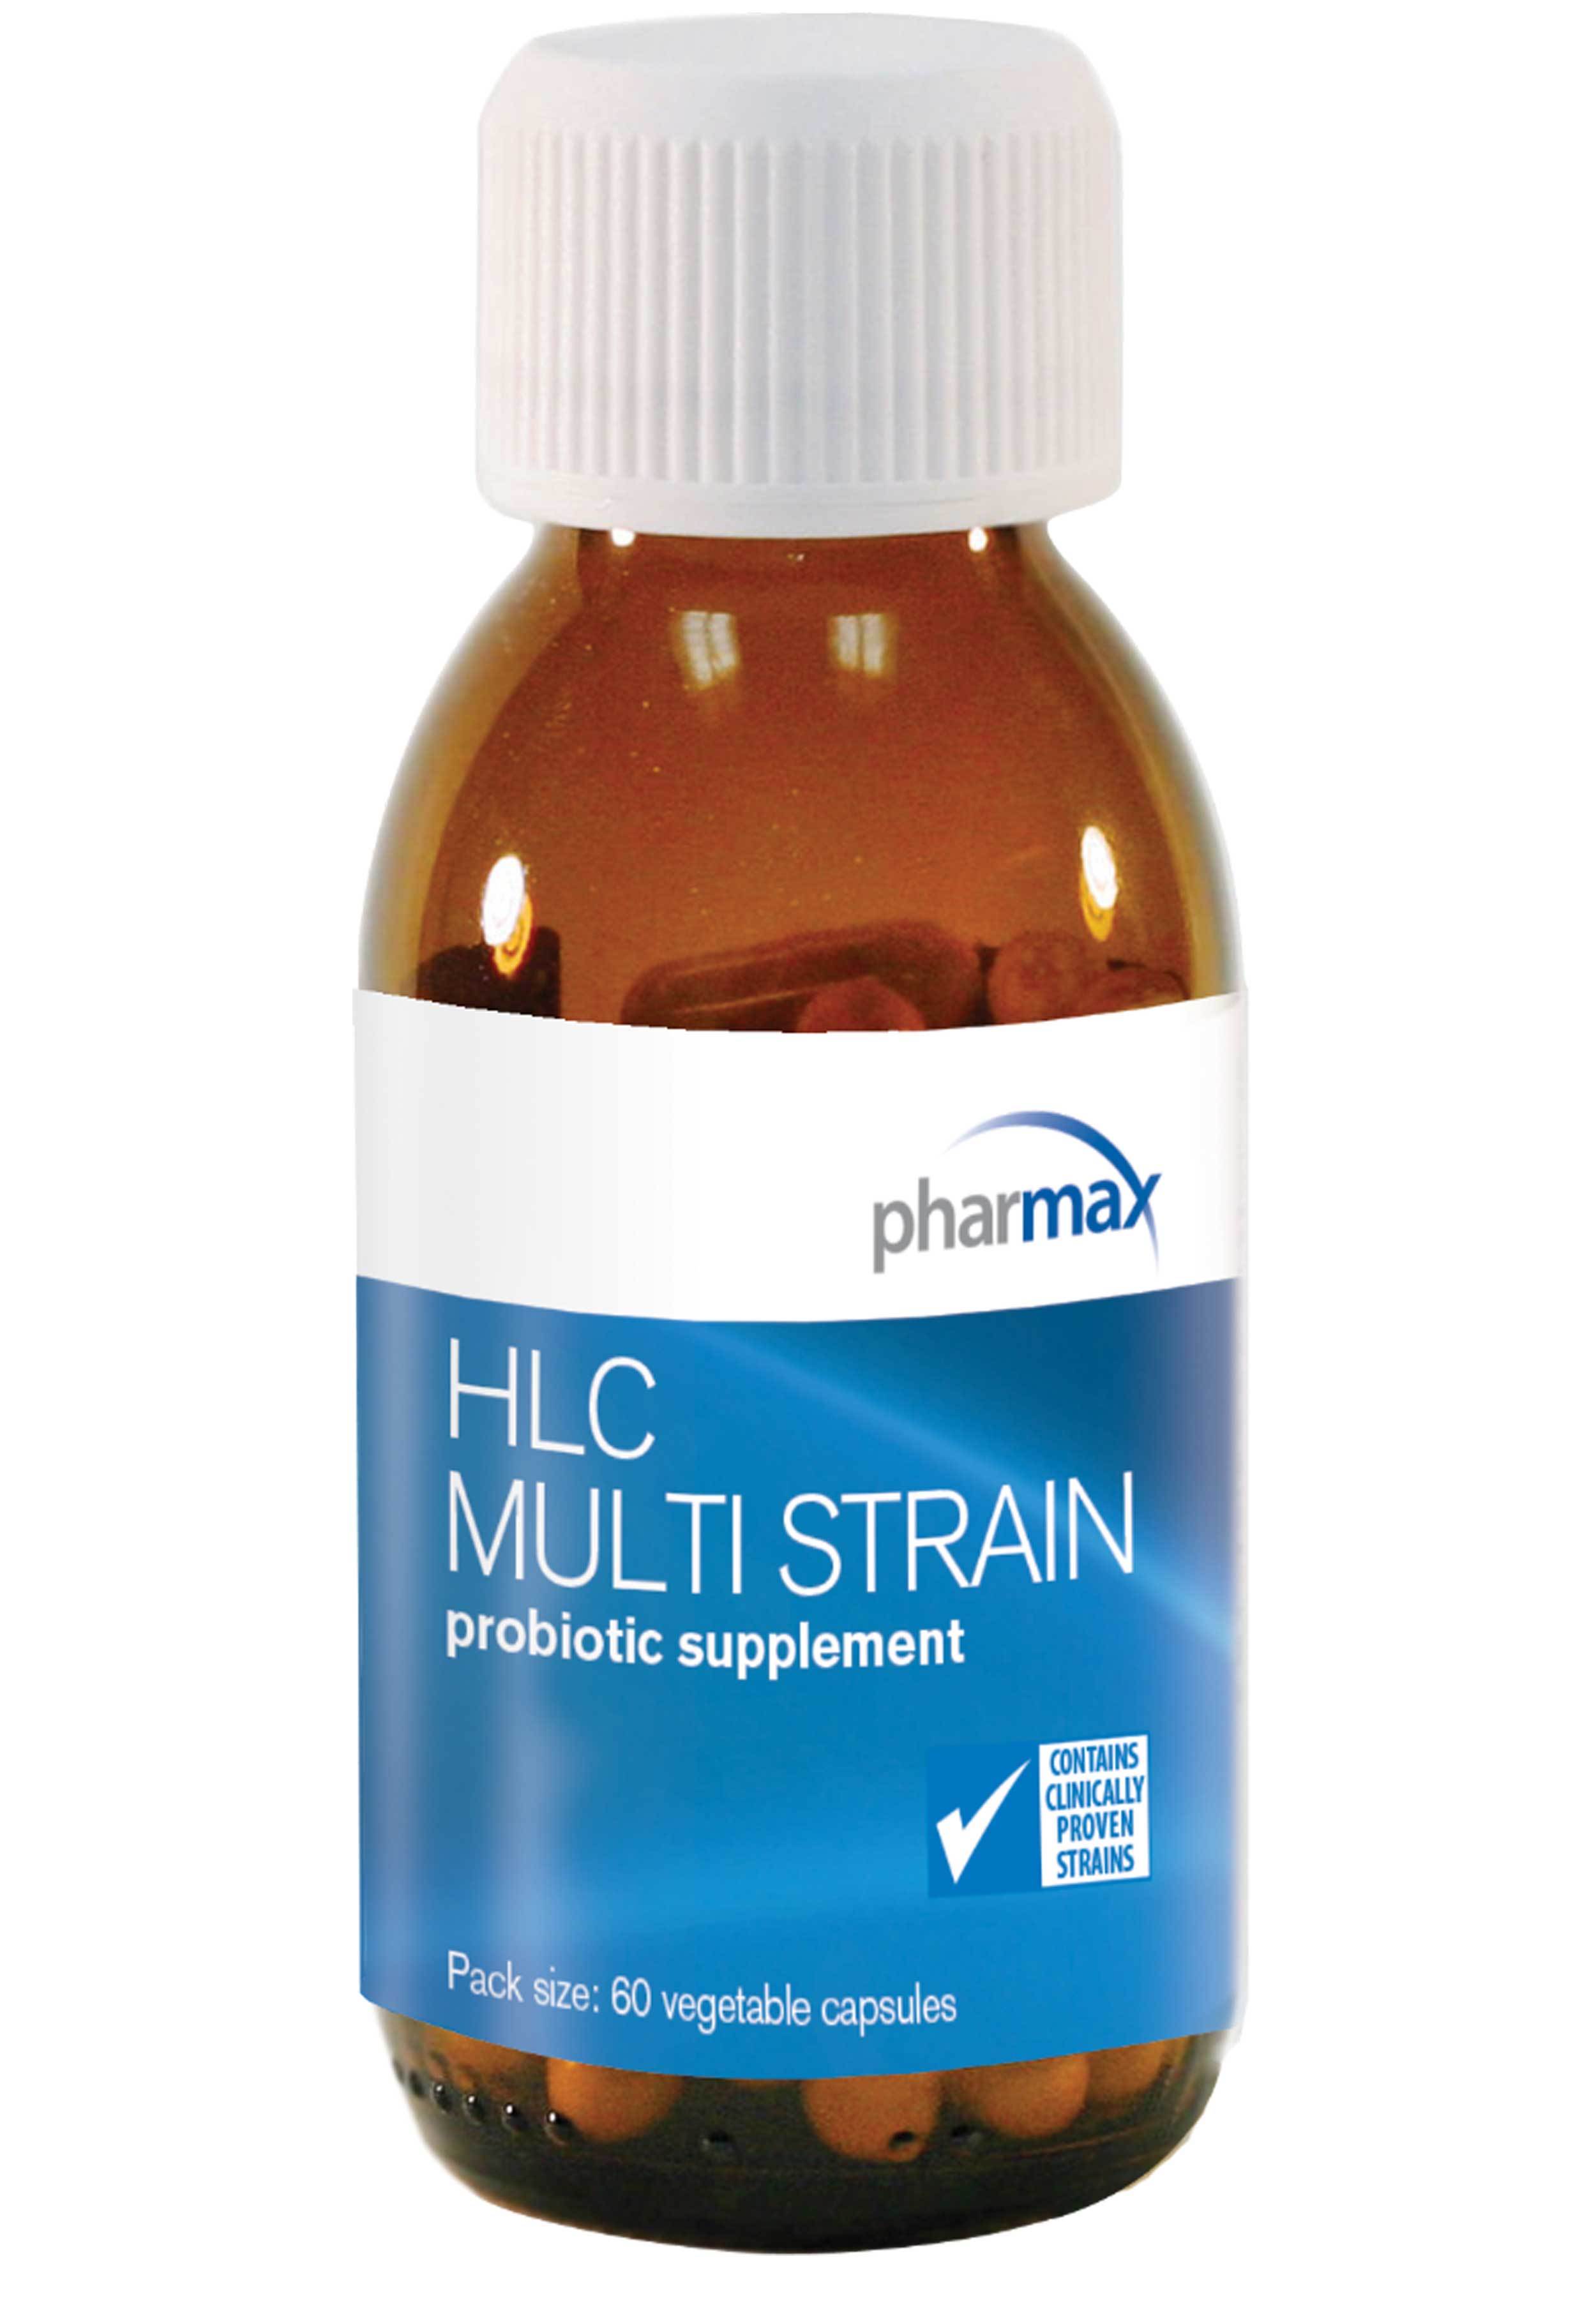 Pharmax HLC Multi Strain